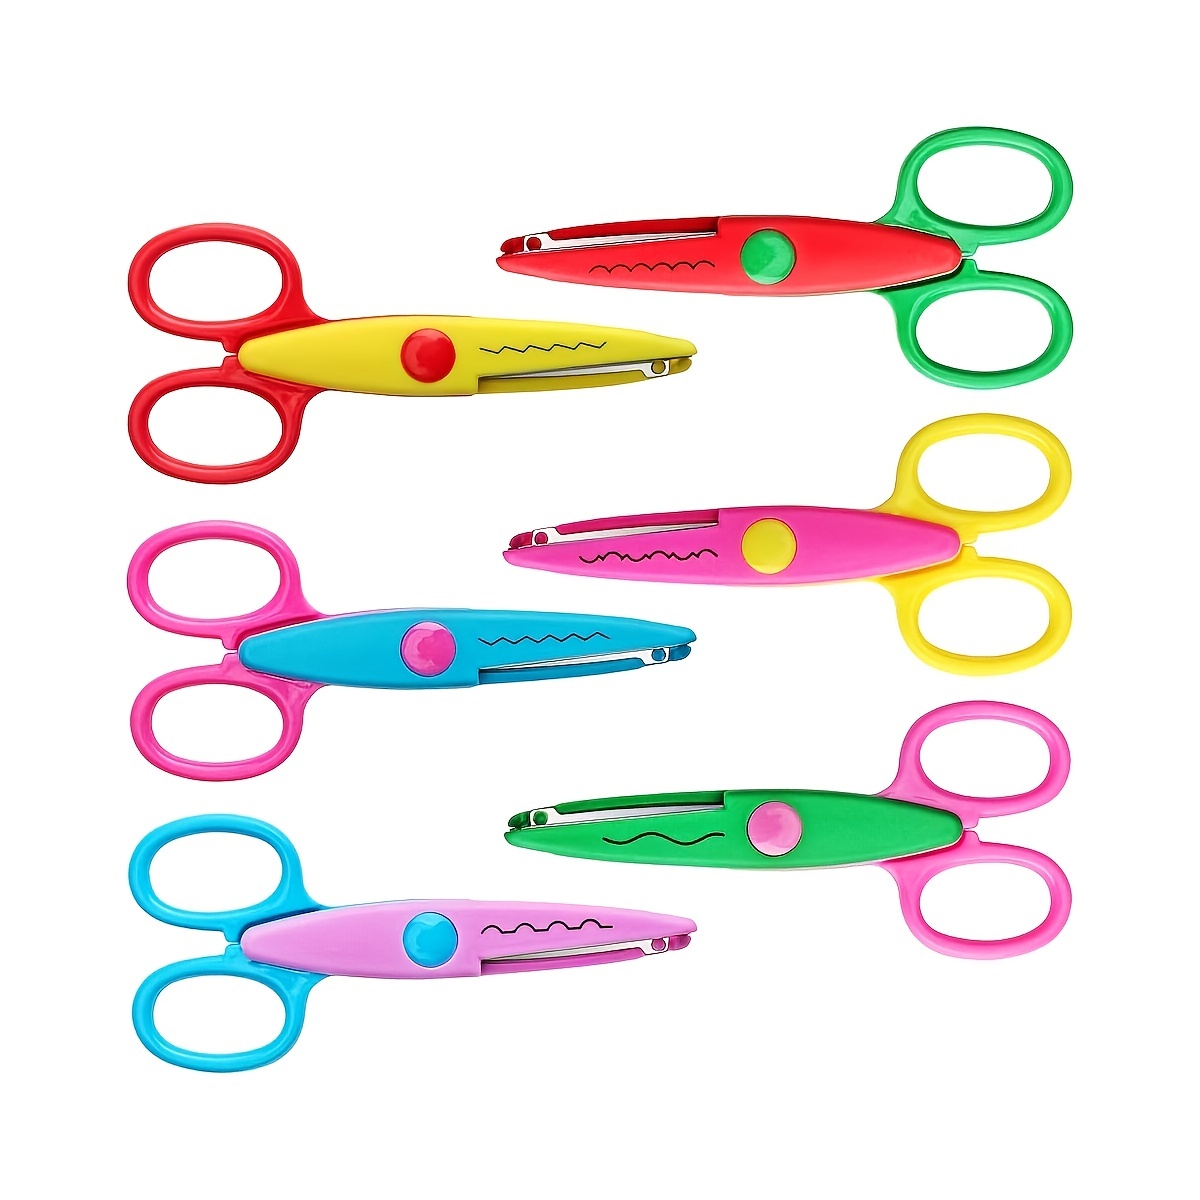 Wholesale & Bulk Scissors, Fun Express